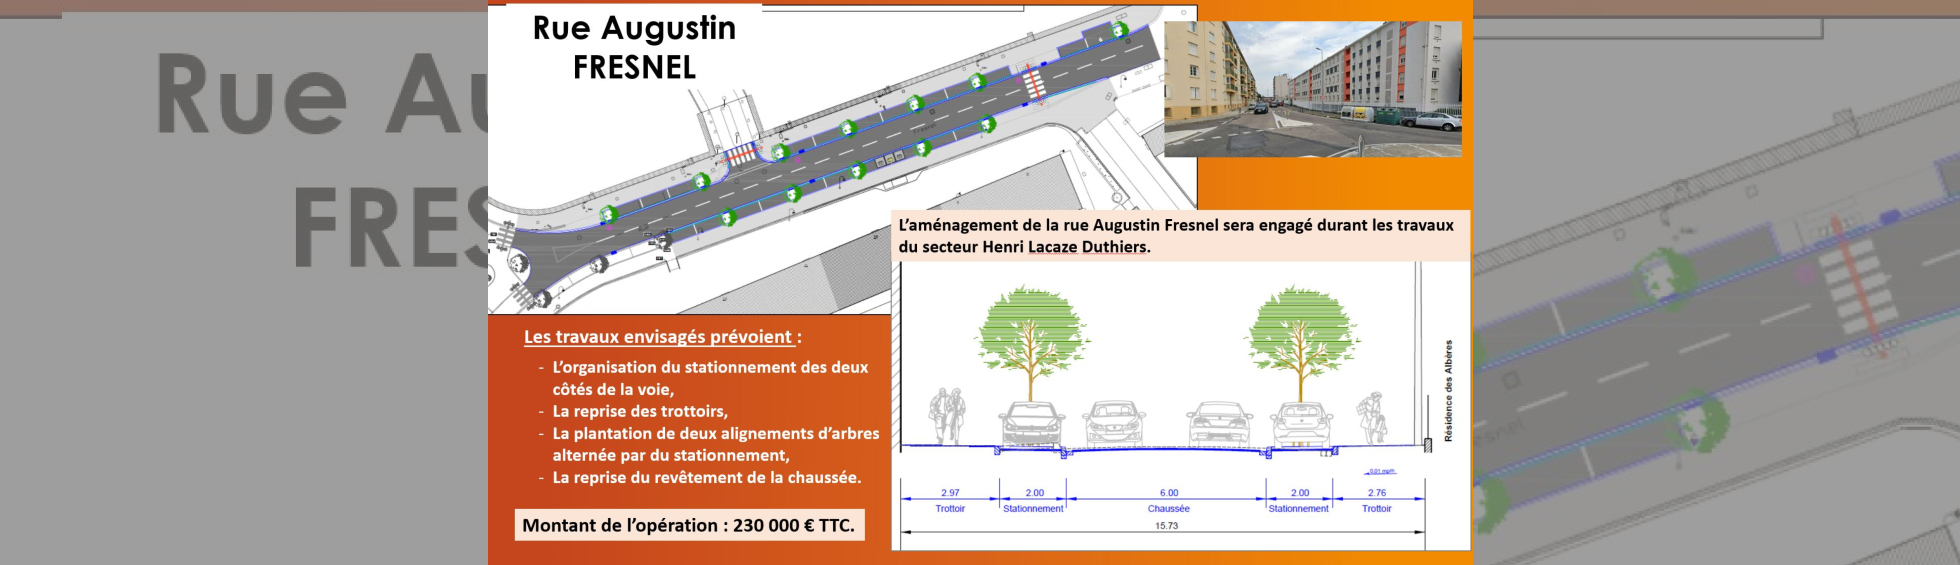 Projet rue Augustin fresnel